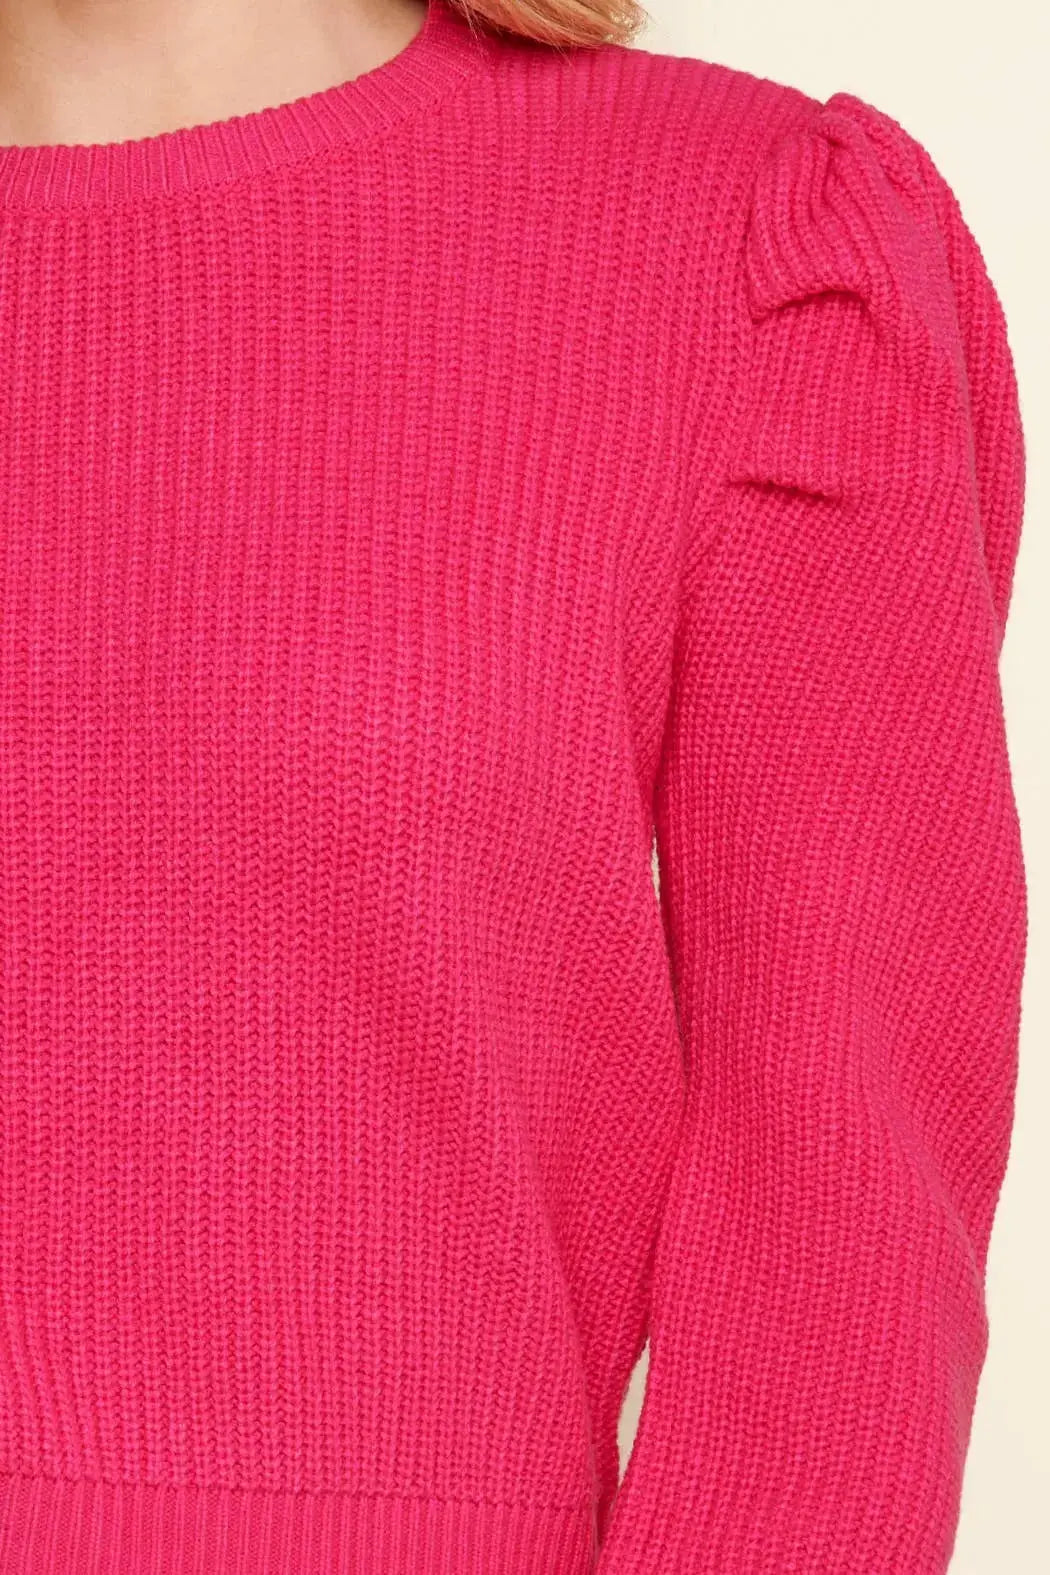 The Tiny Details Fuchsia Draped Power Shoulder Sweater